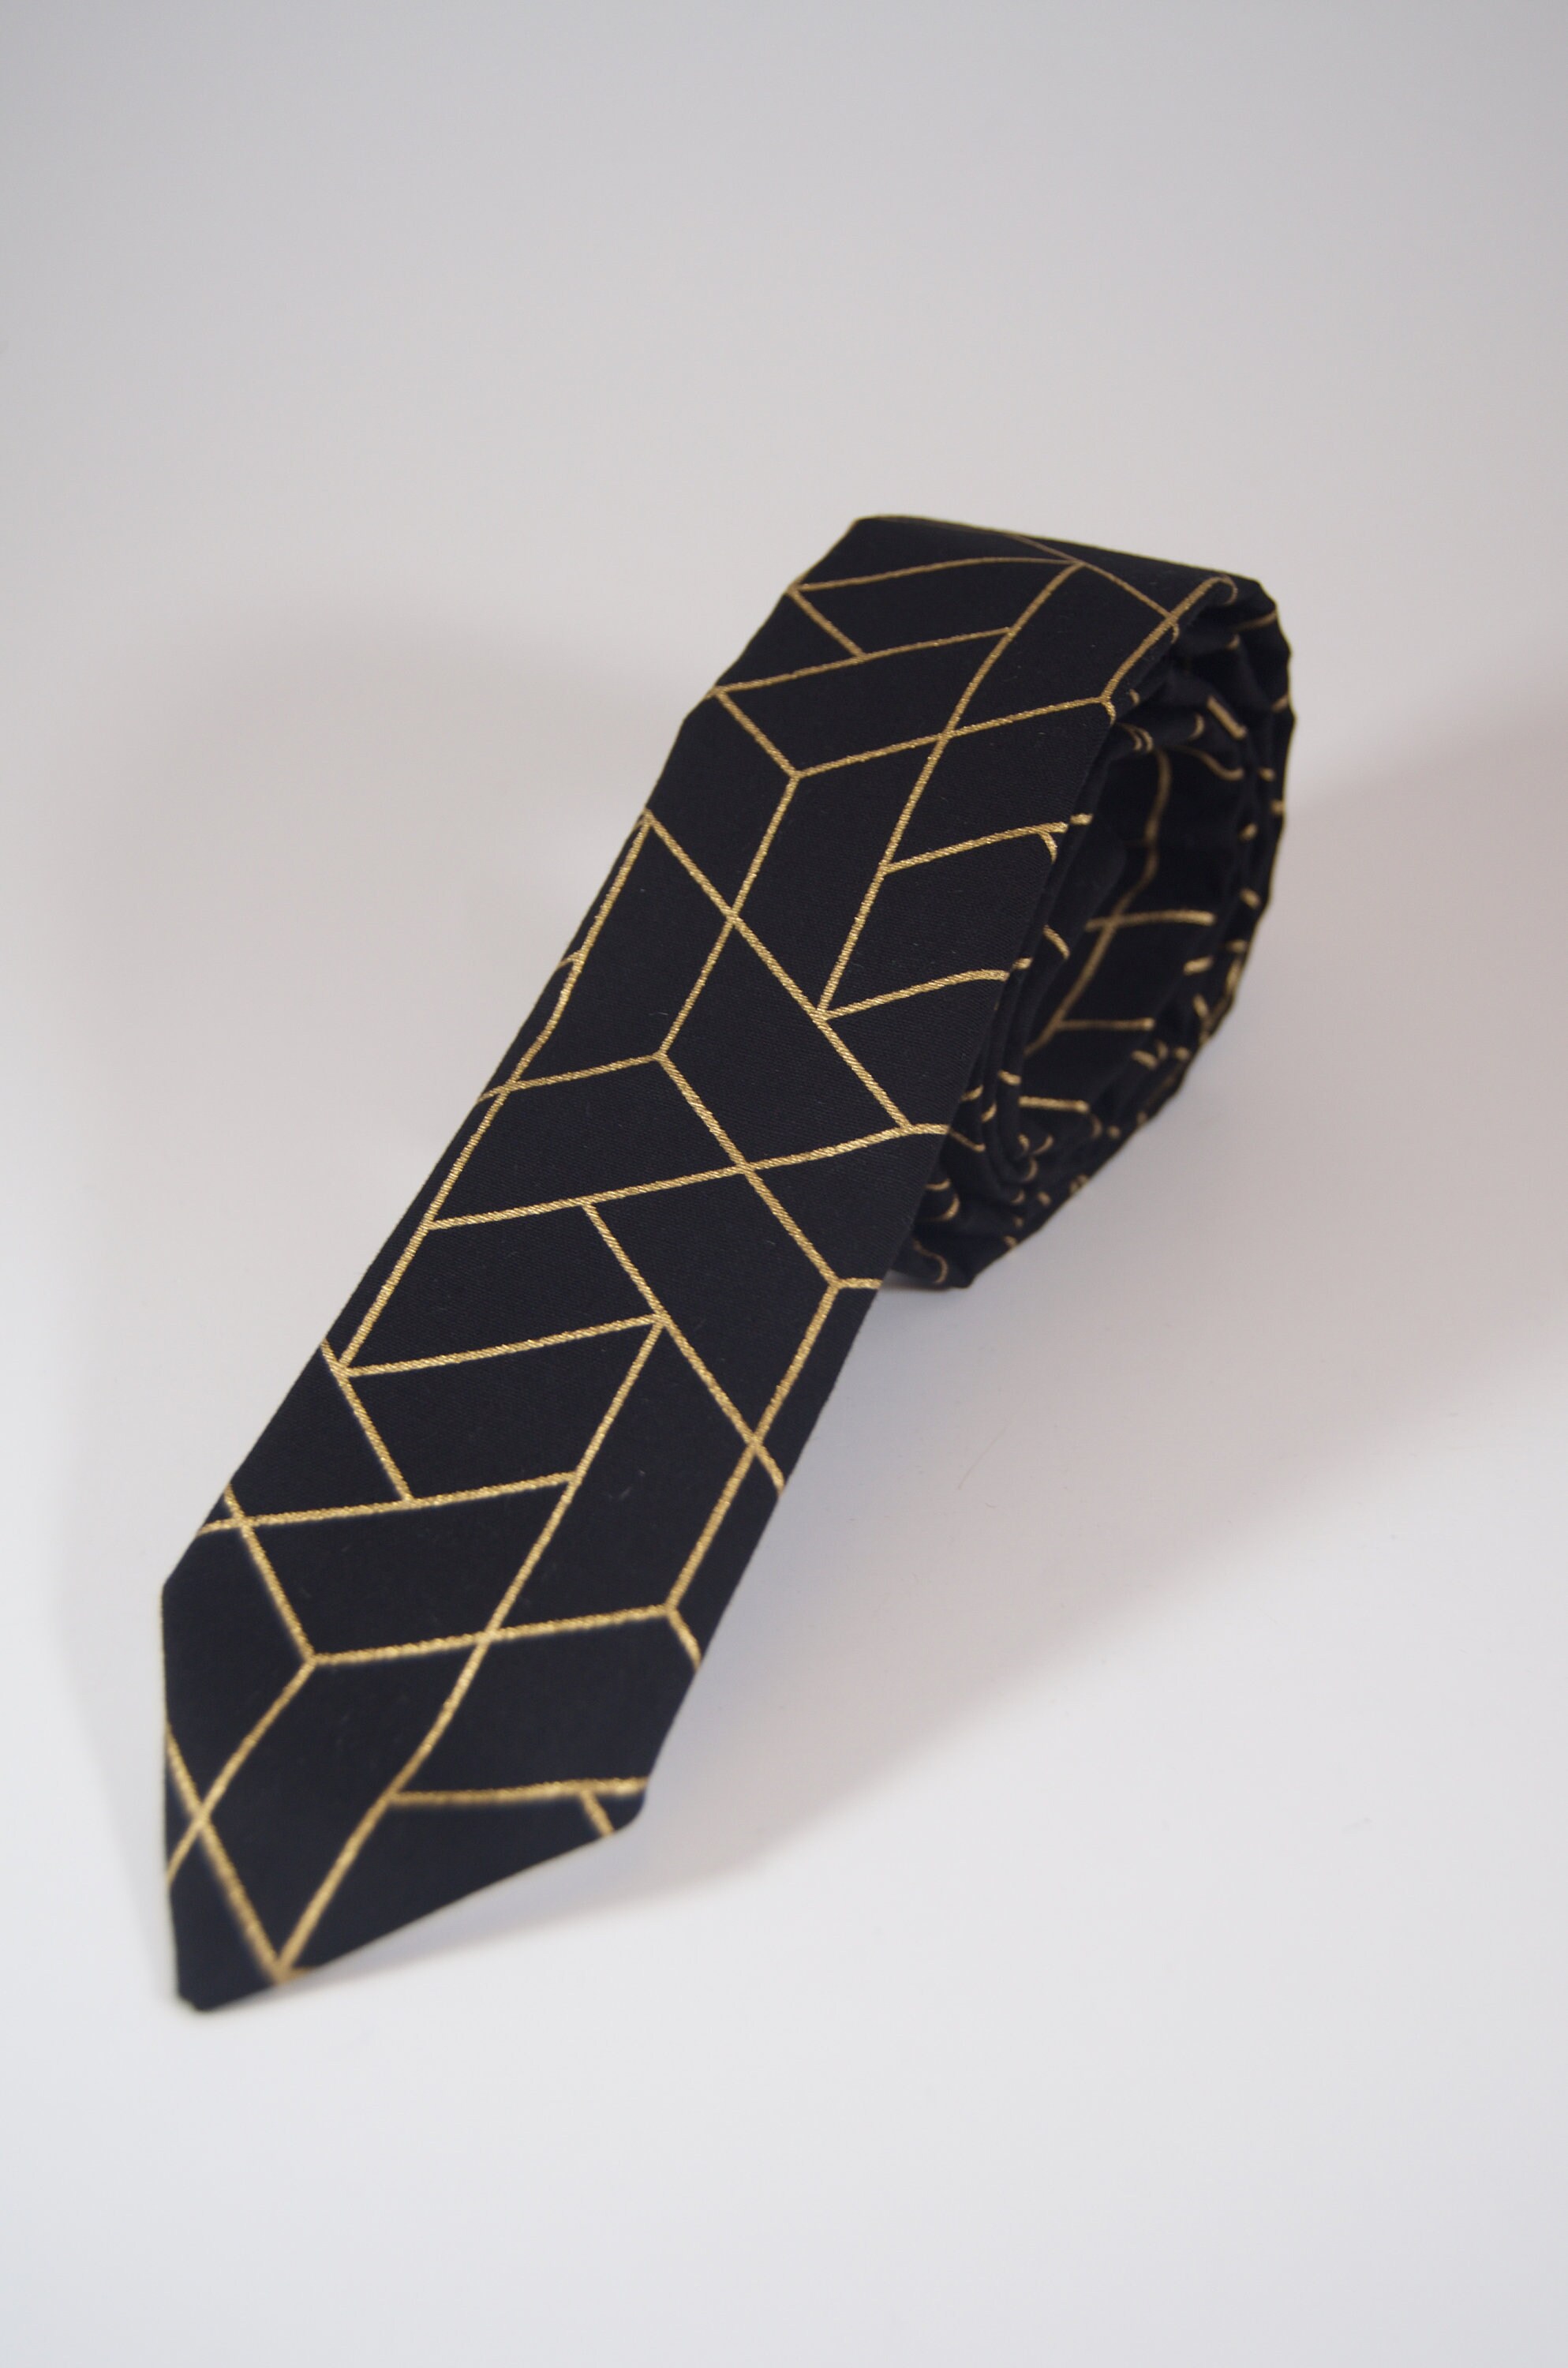 Barry.Wang Uomo Stripe Tie Set Pochette gemello grigio seta Cravatte formale 